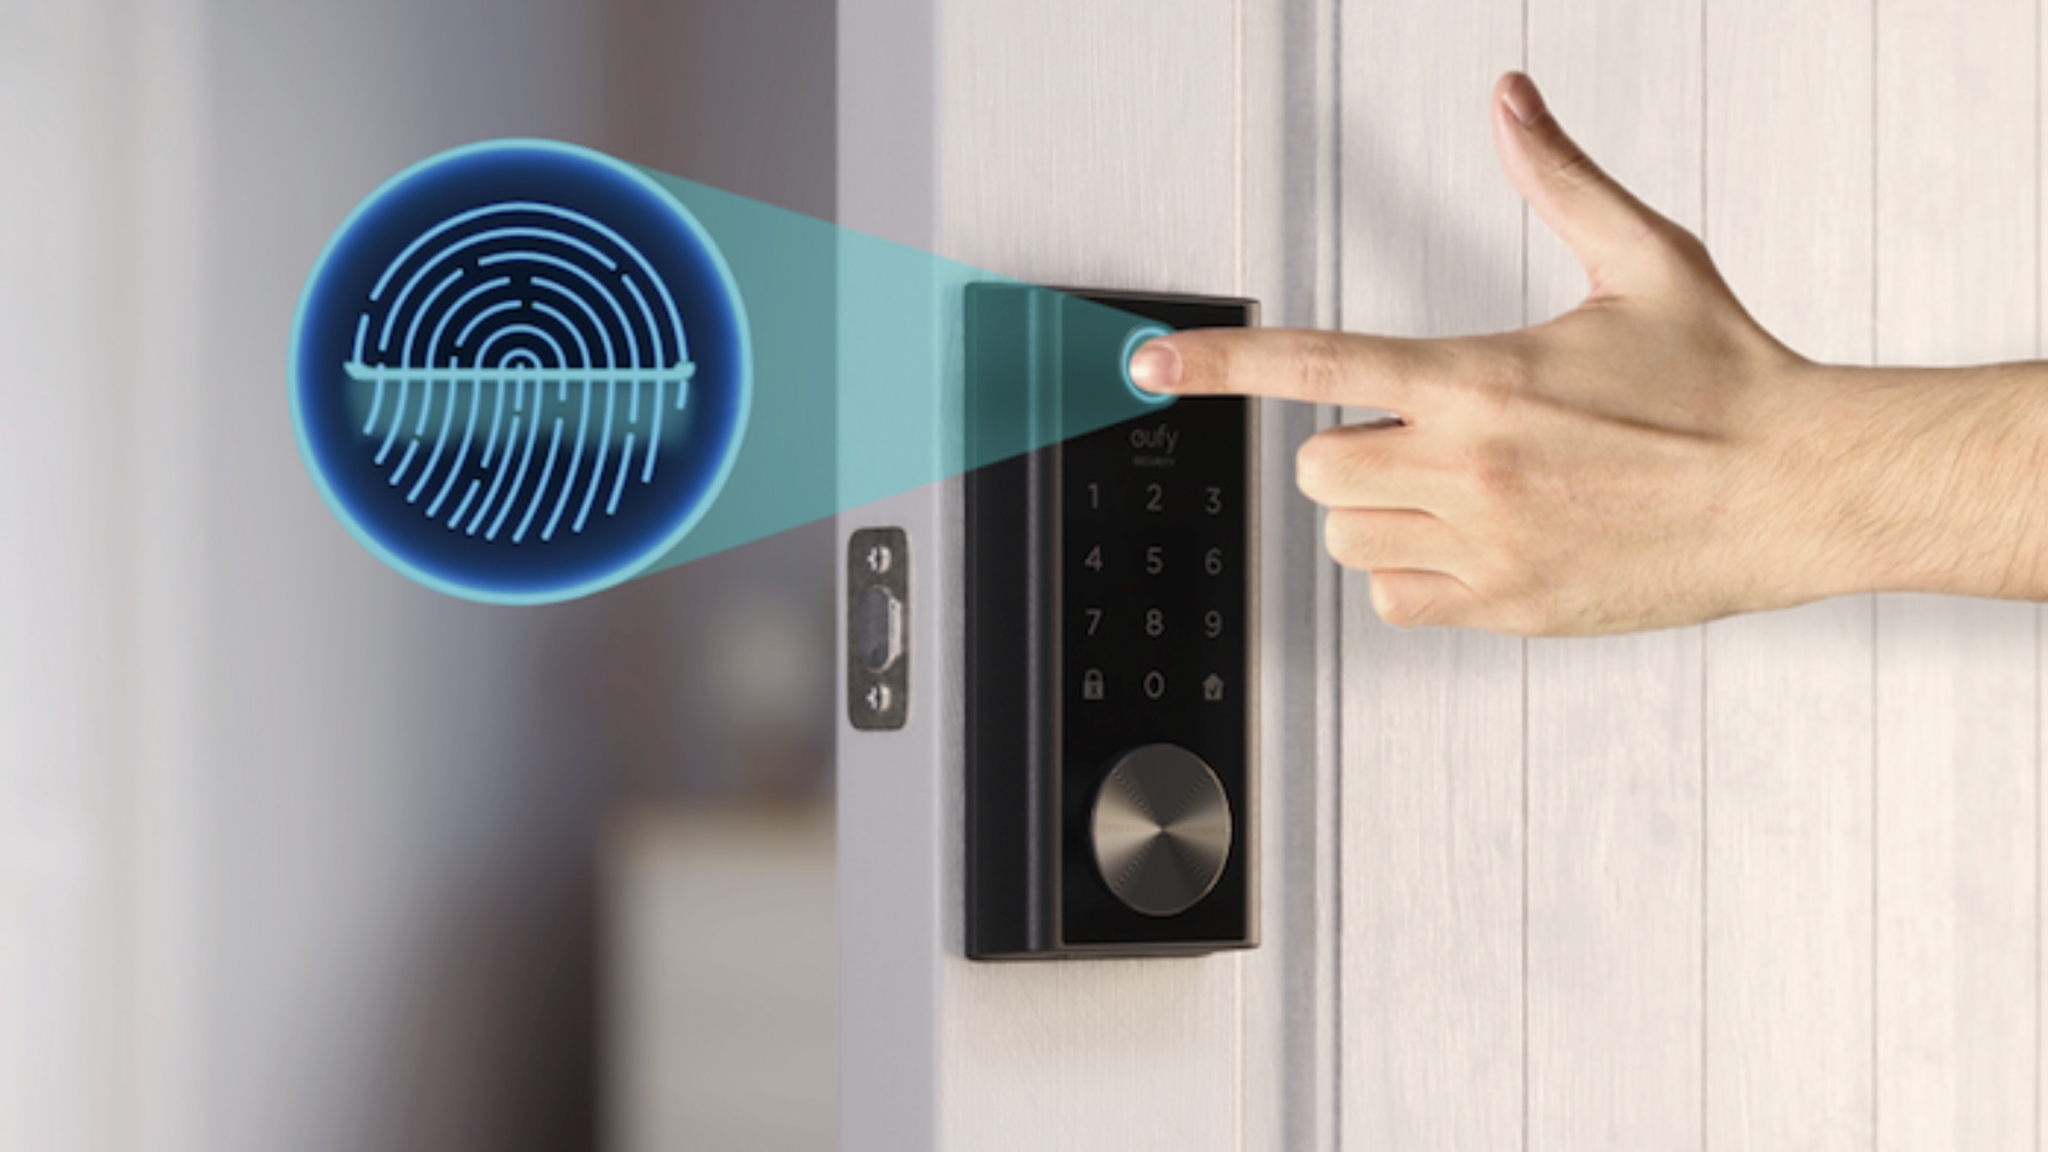 Eufy Smart Lock Touch fingerprint recognition